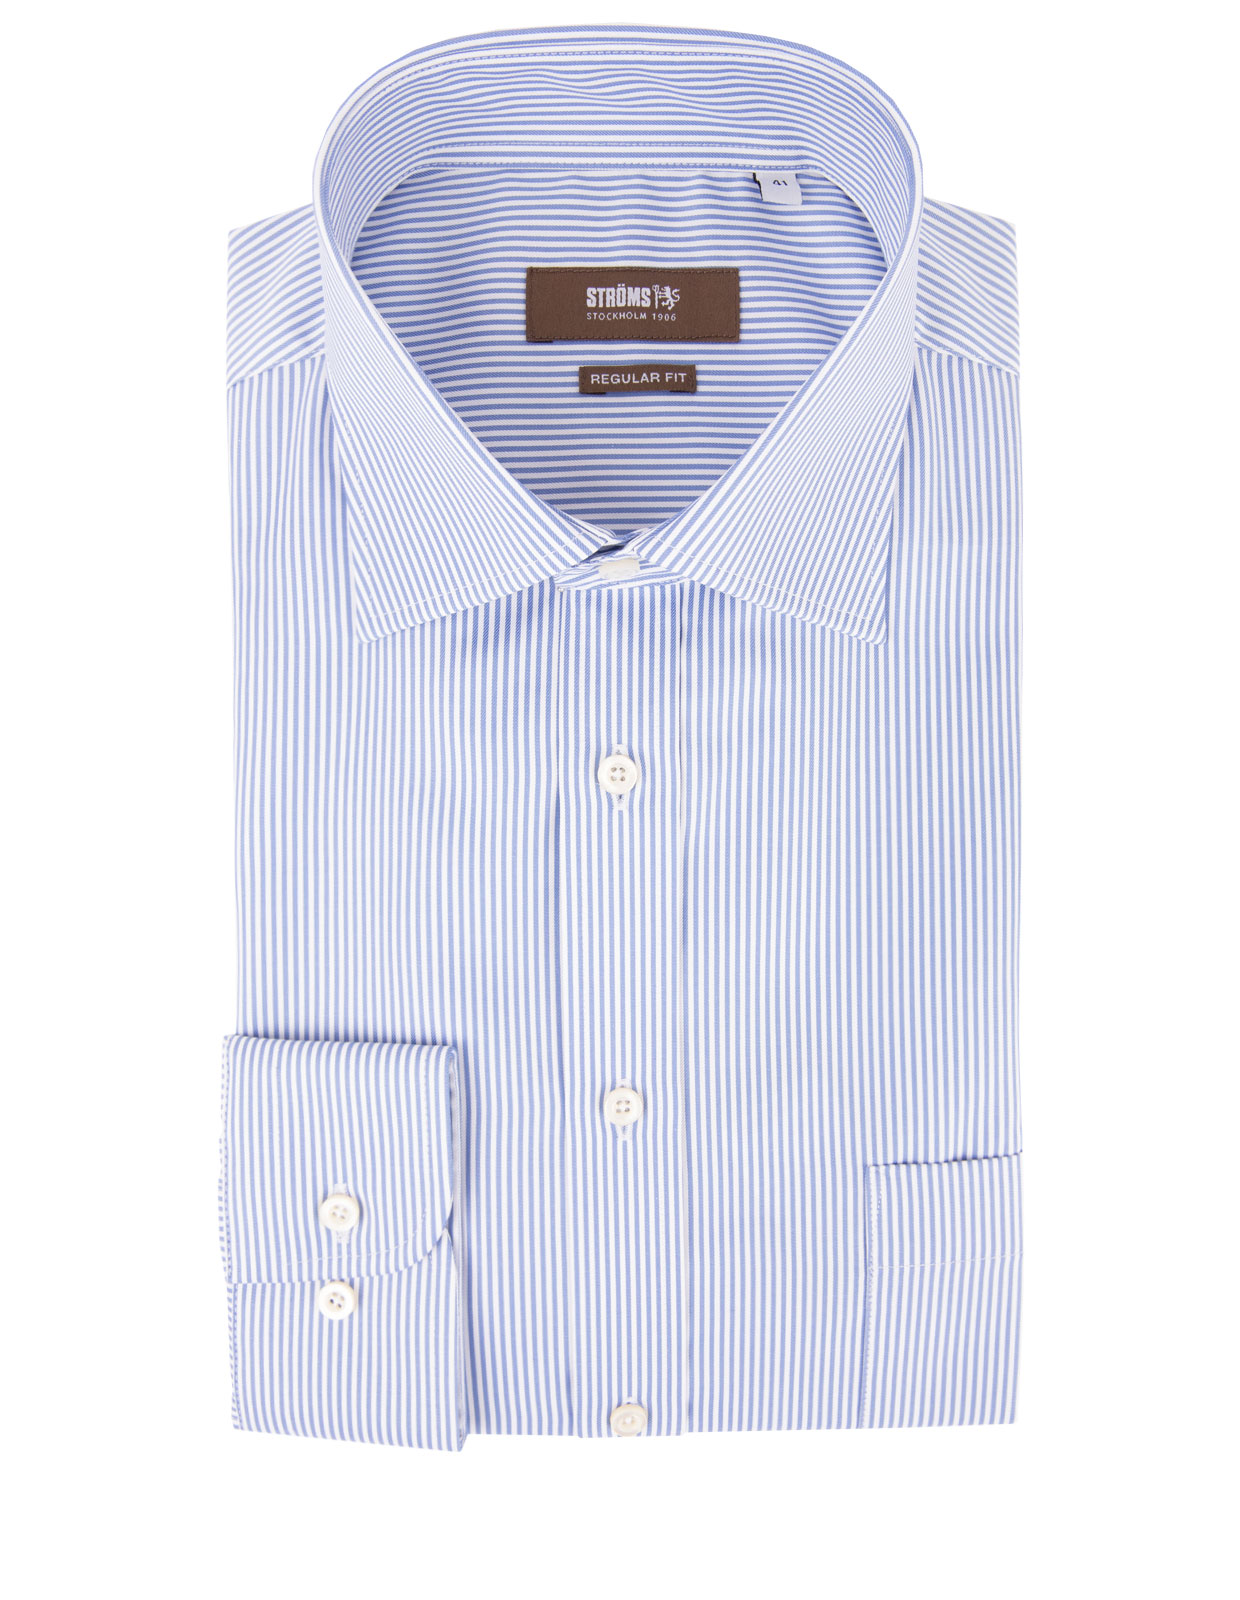 Regular Fit Cotton Shirt Stripe Blue/White Stl 44